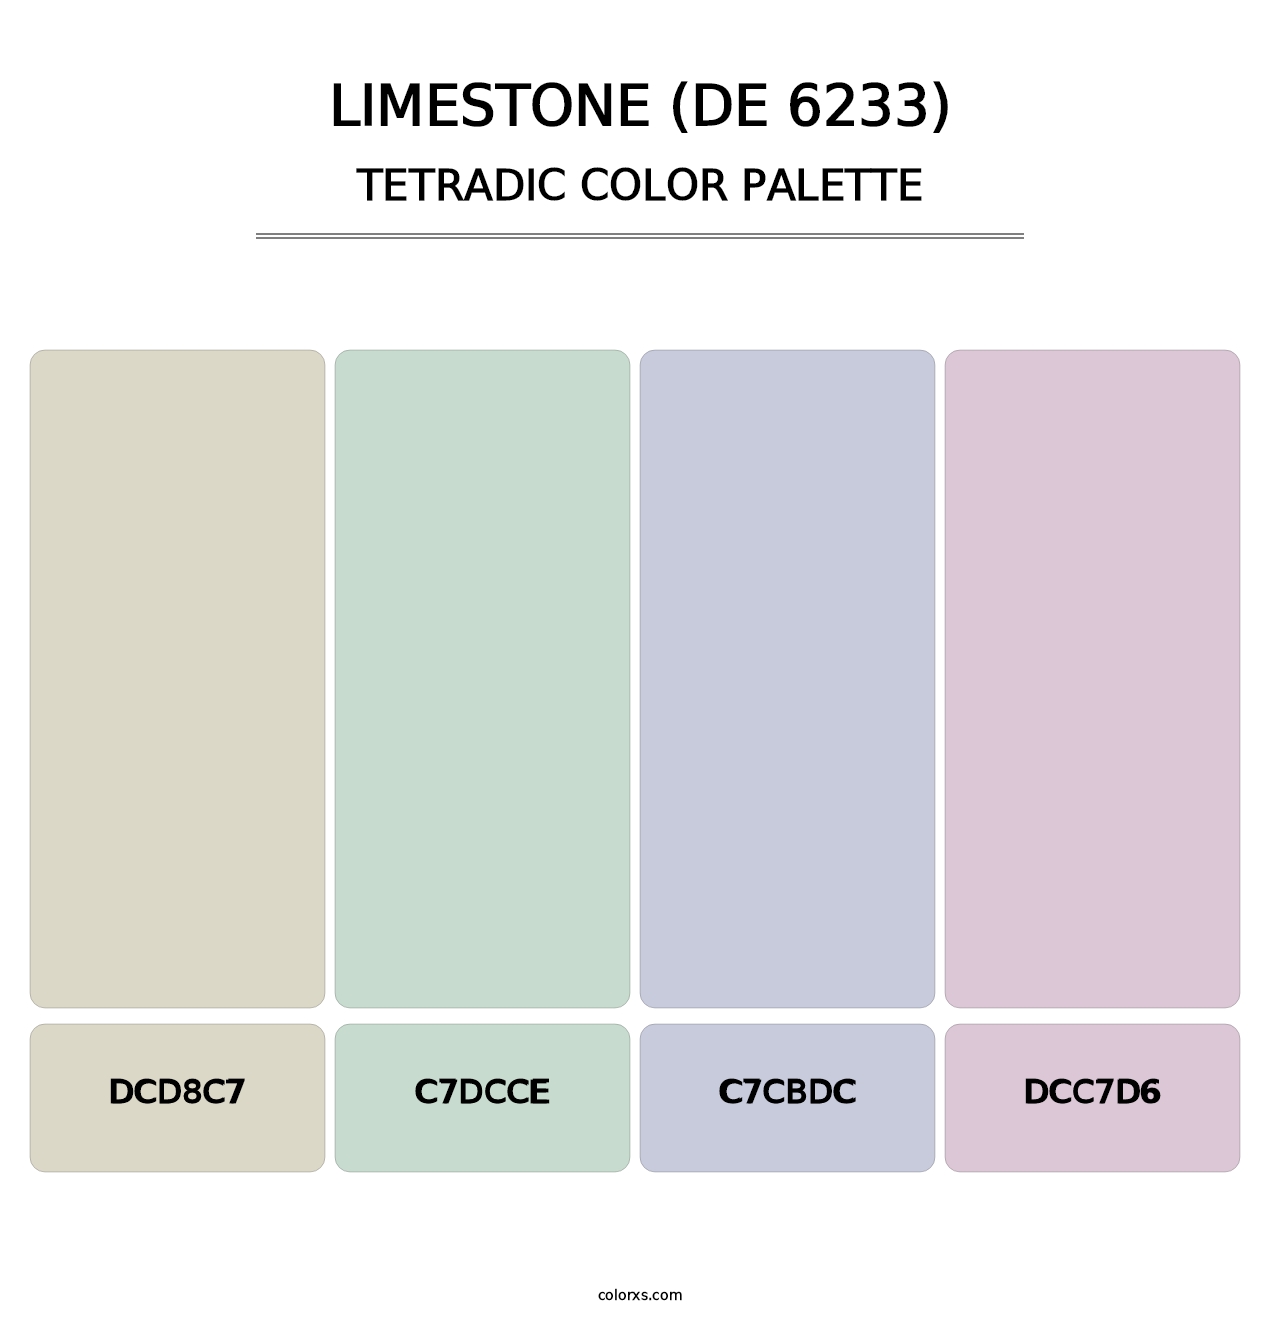 Limestone (DE 6233) - Tetradic Color Palette